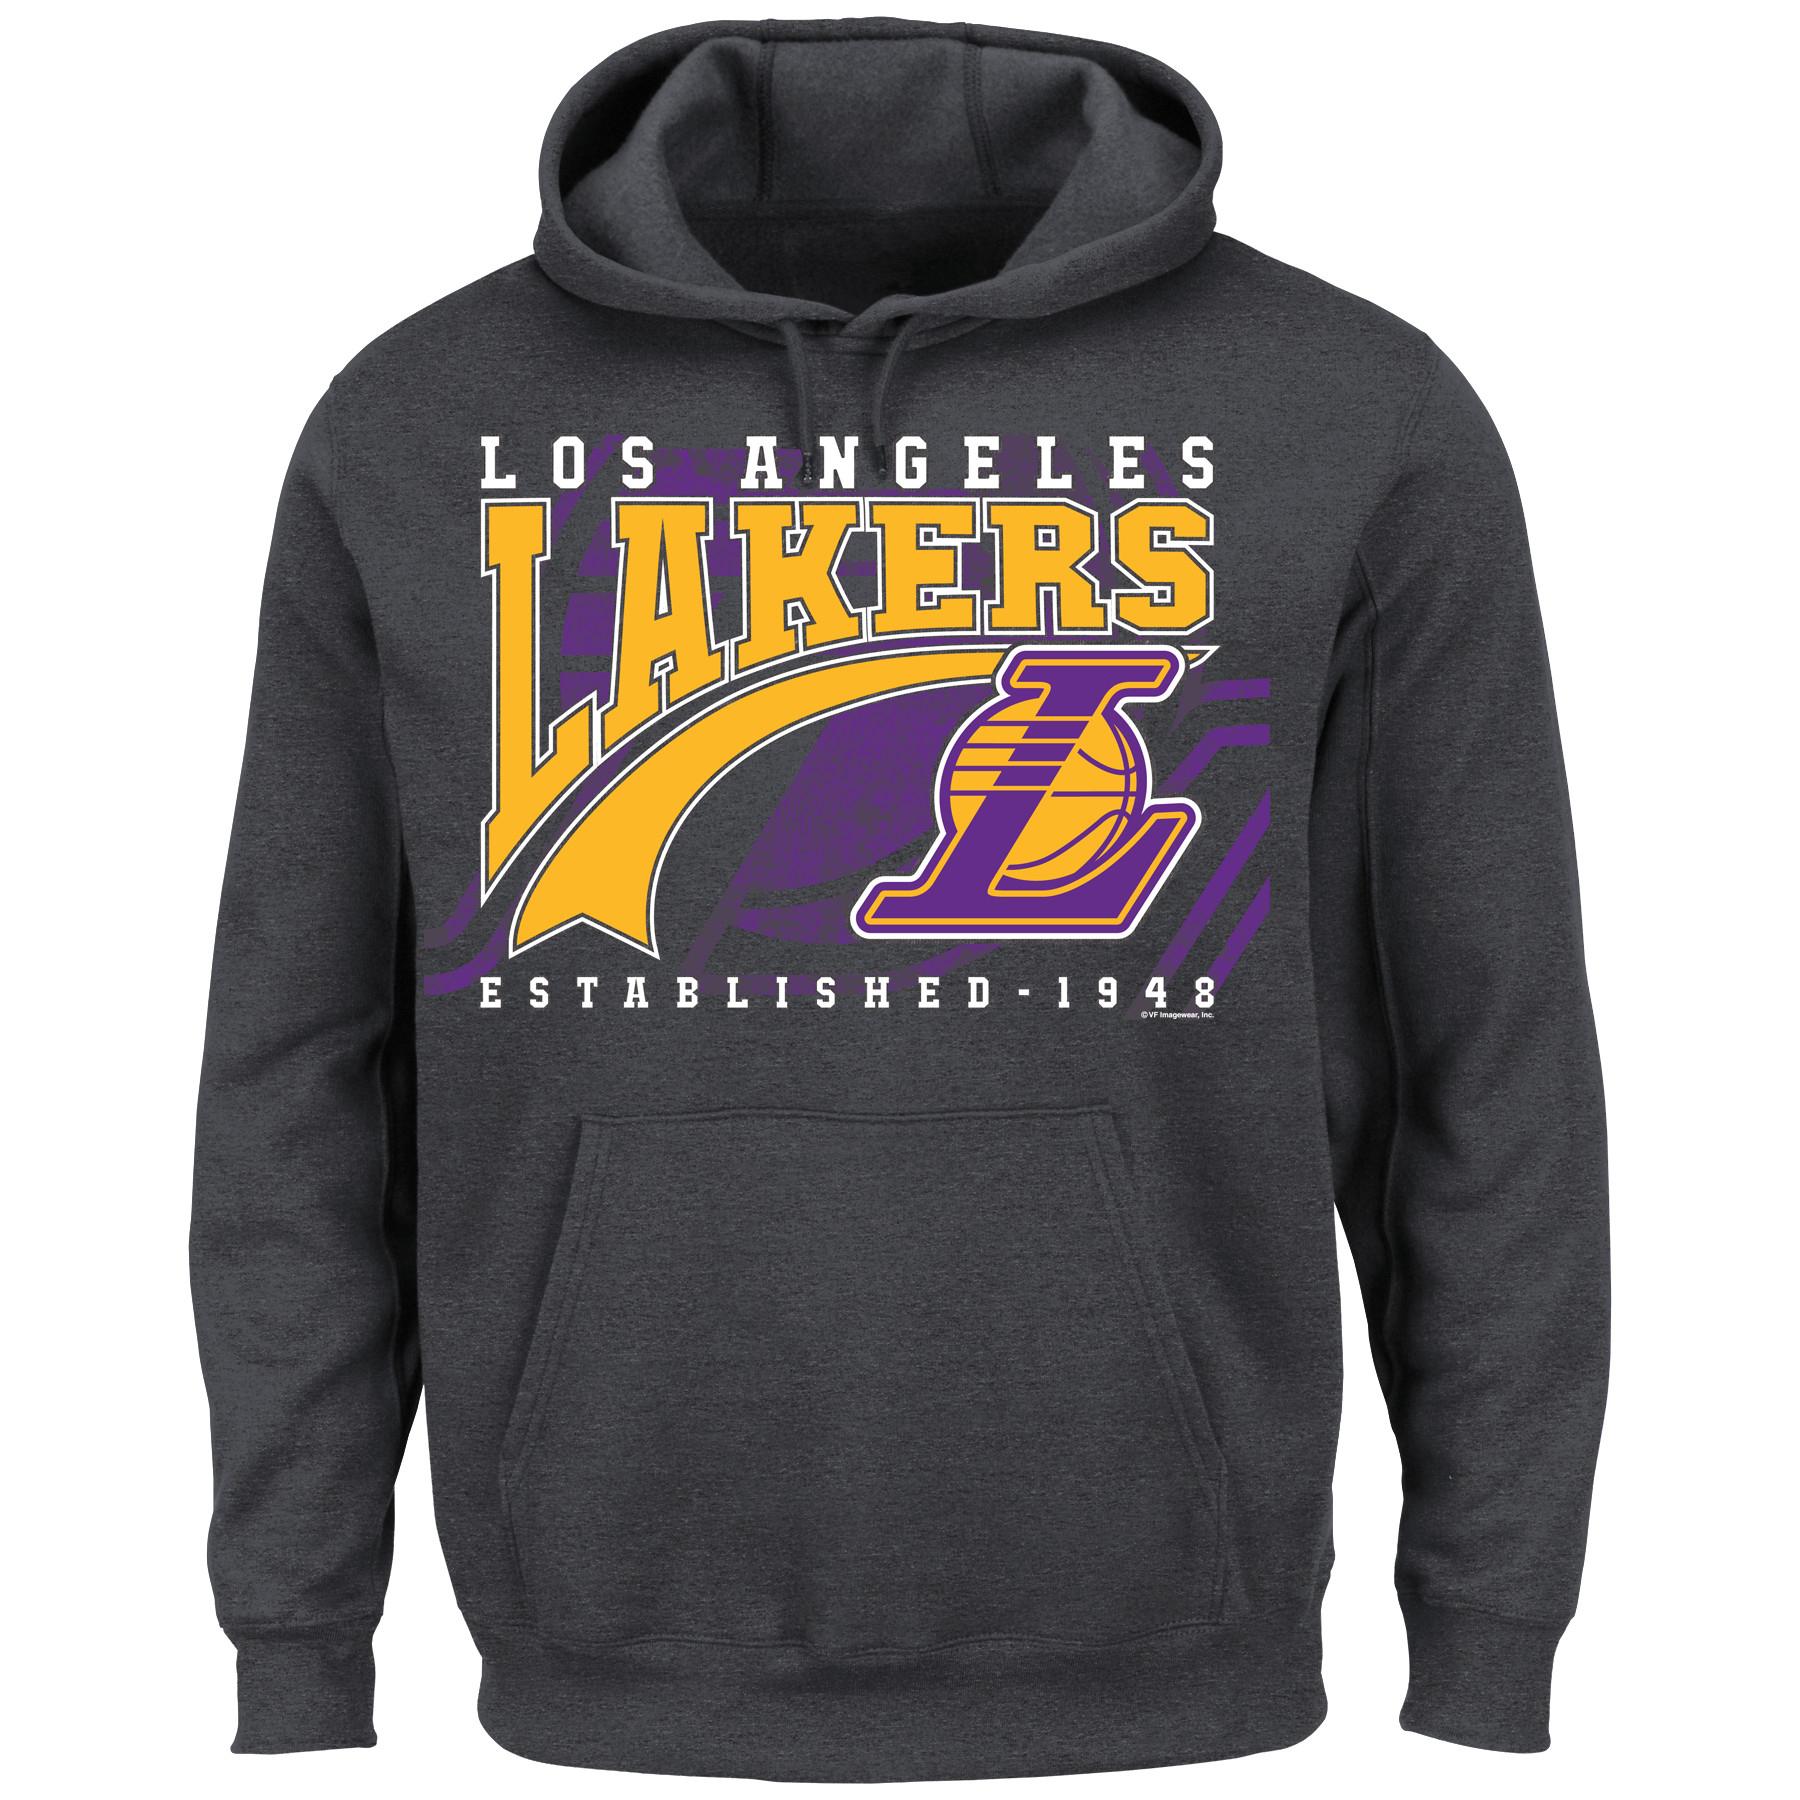 NBA(CANONICAL) Men's Big & Tall Fleece Hoodie - Los Angeles Lakers